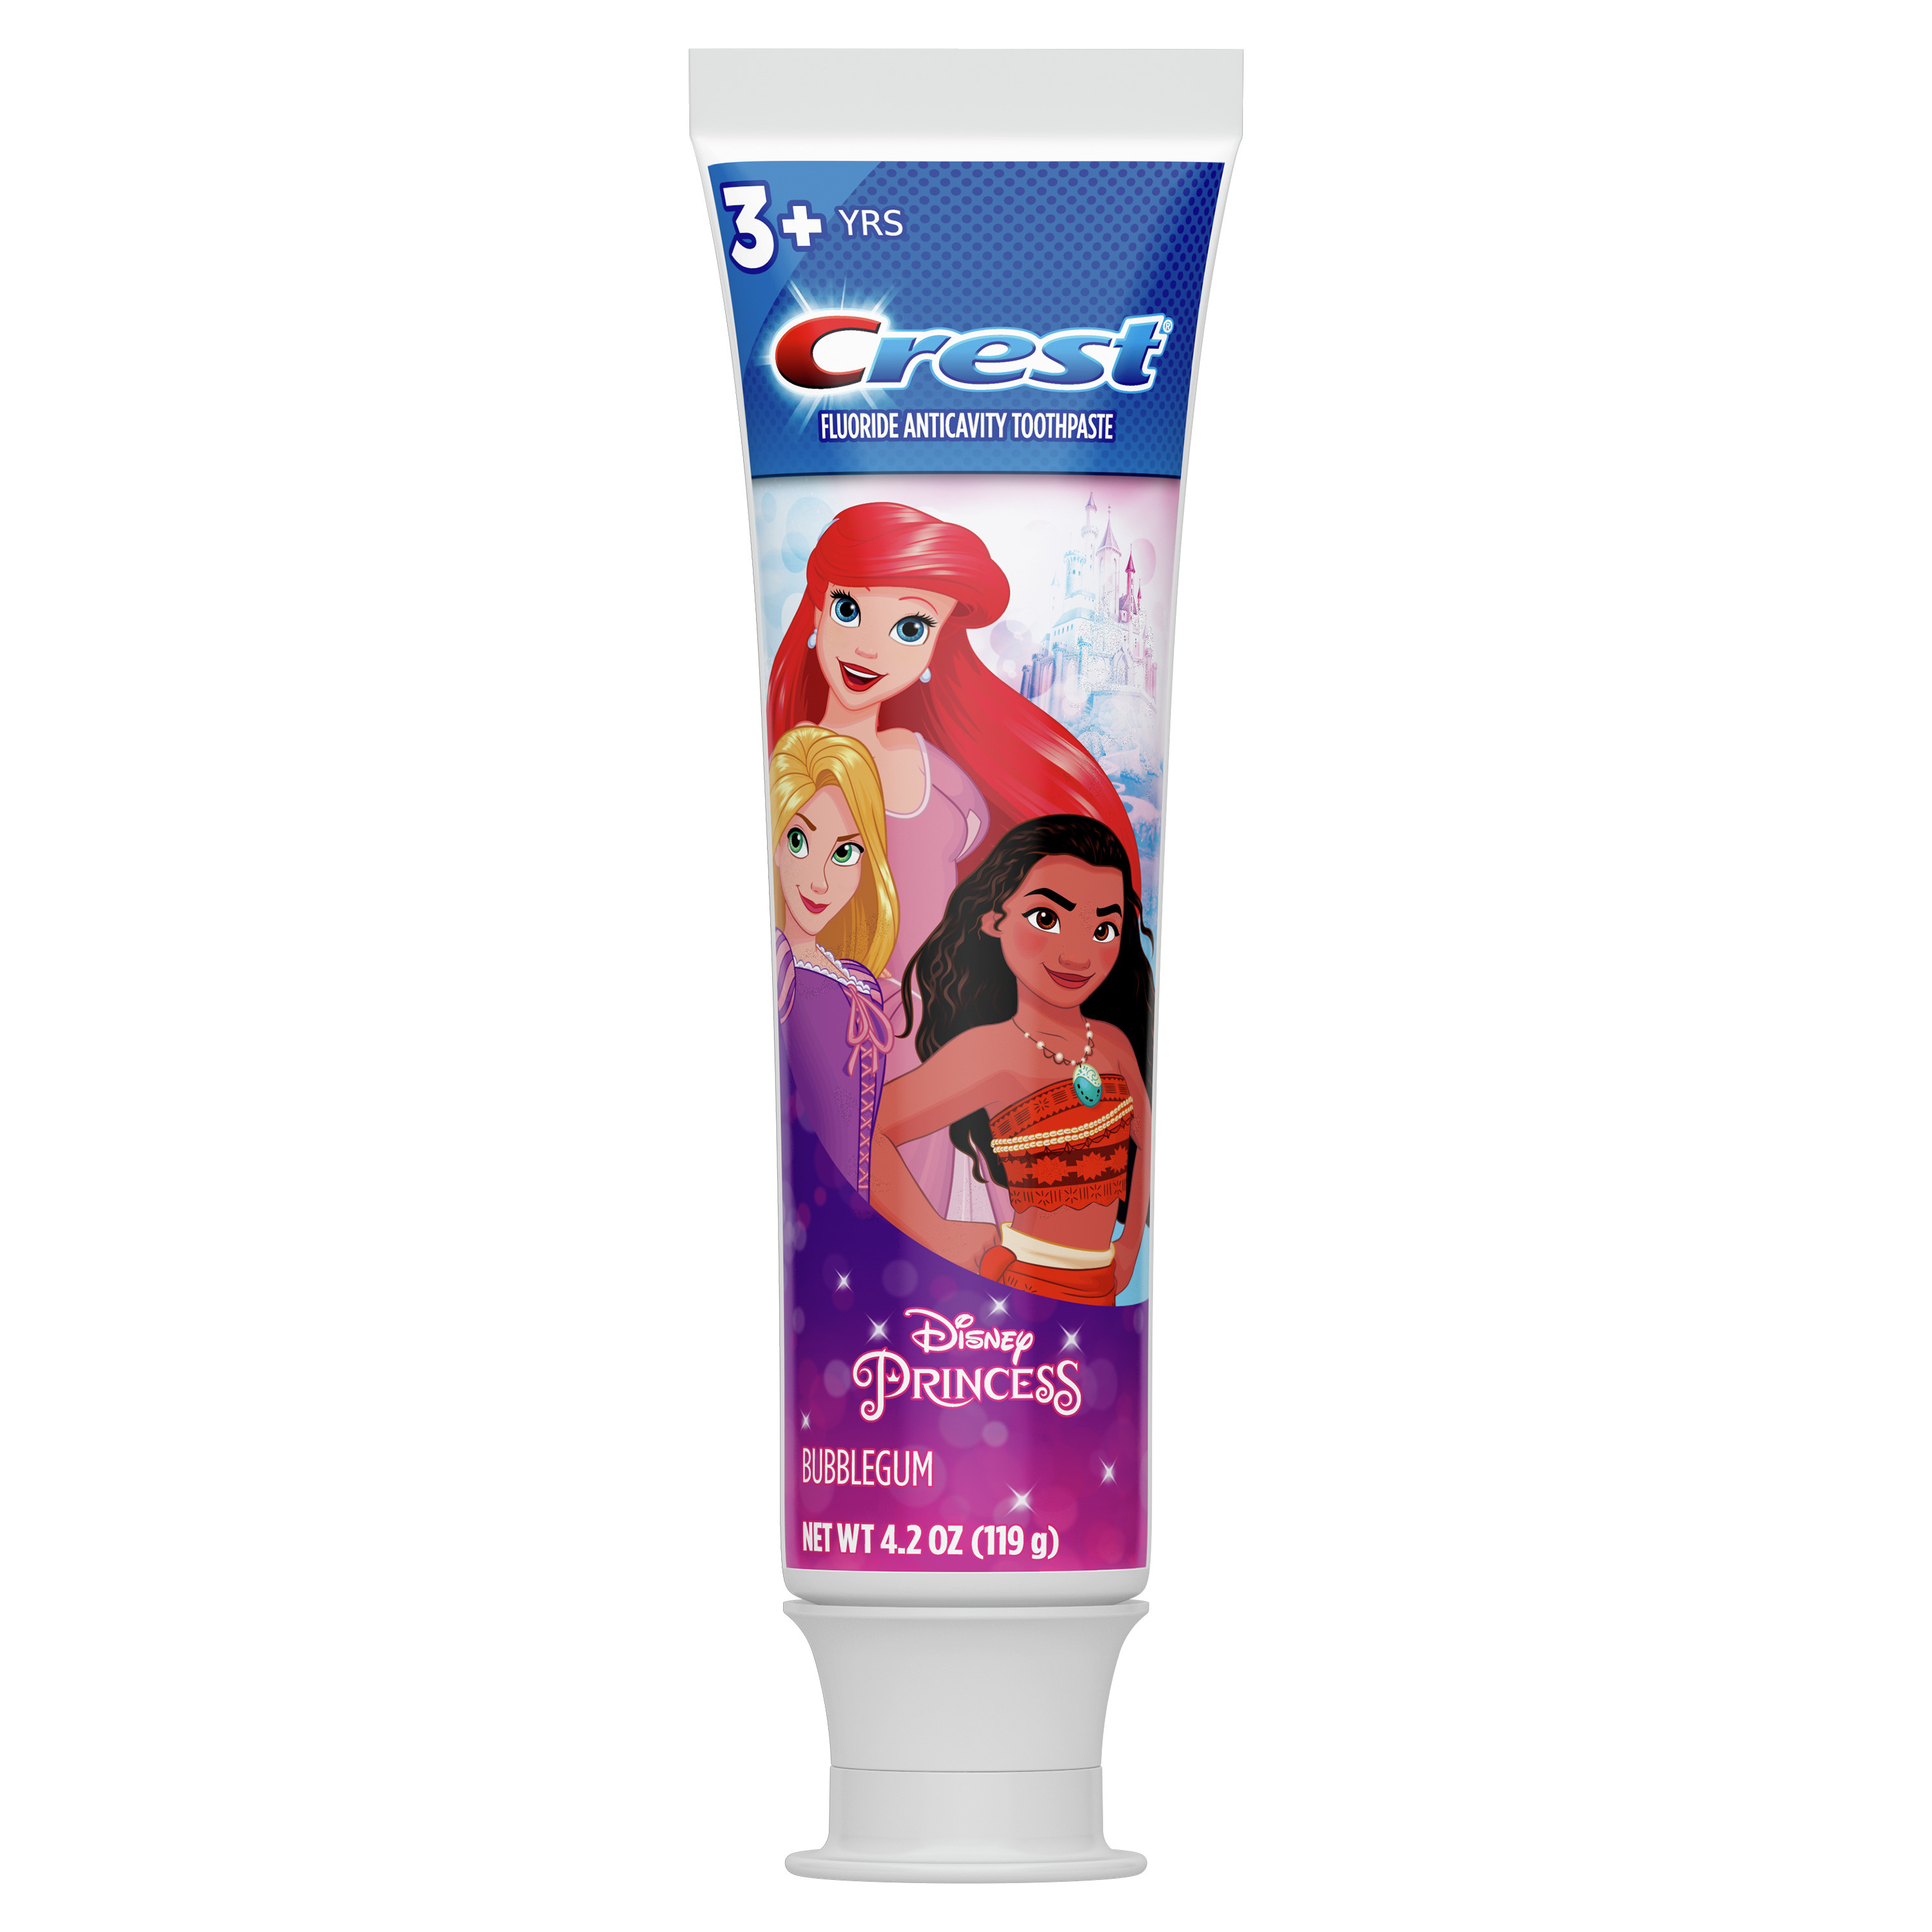 Crest Kid's Toothpaste Featuring Disney Princesses, Bubblegum Flavor, 4.2 oz - image 1 of 12